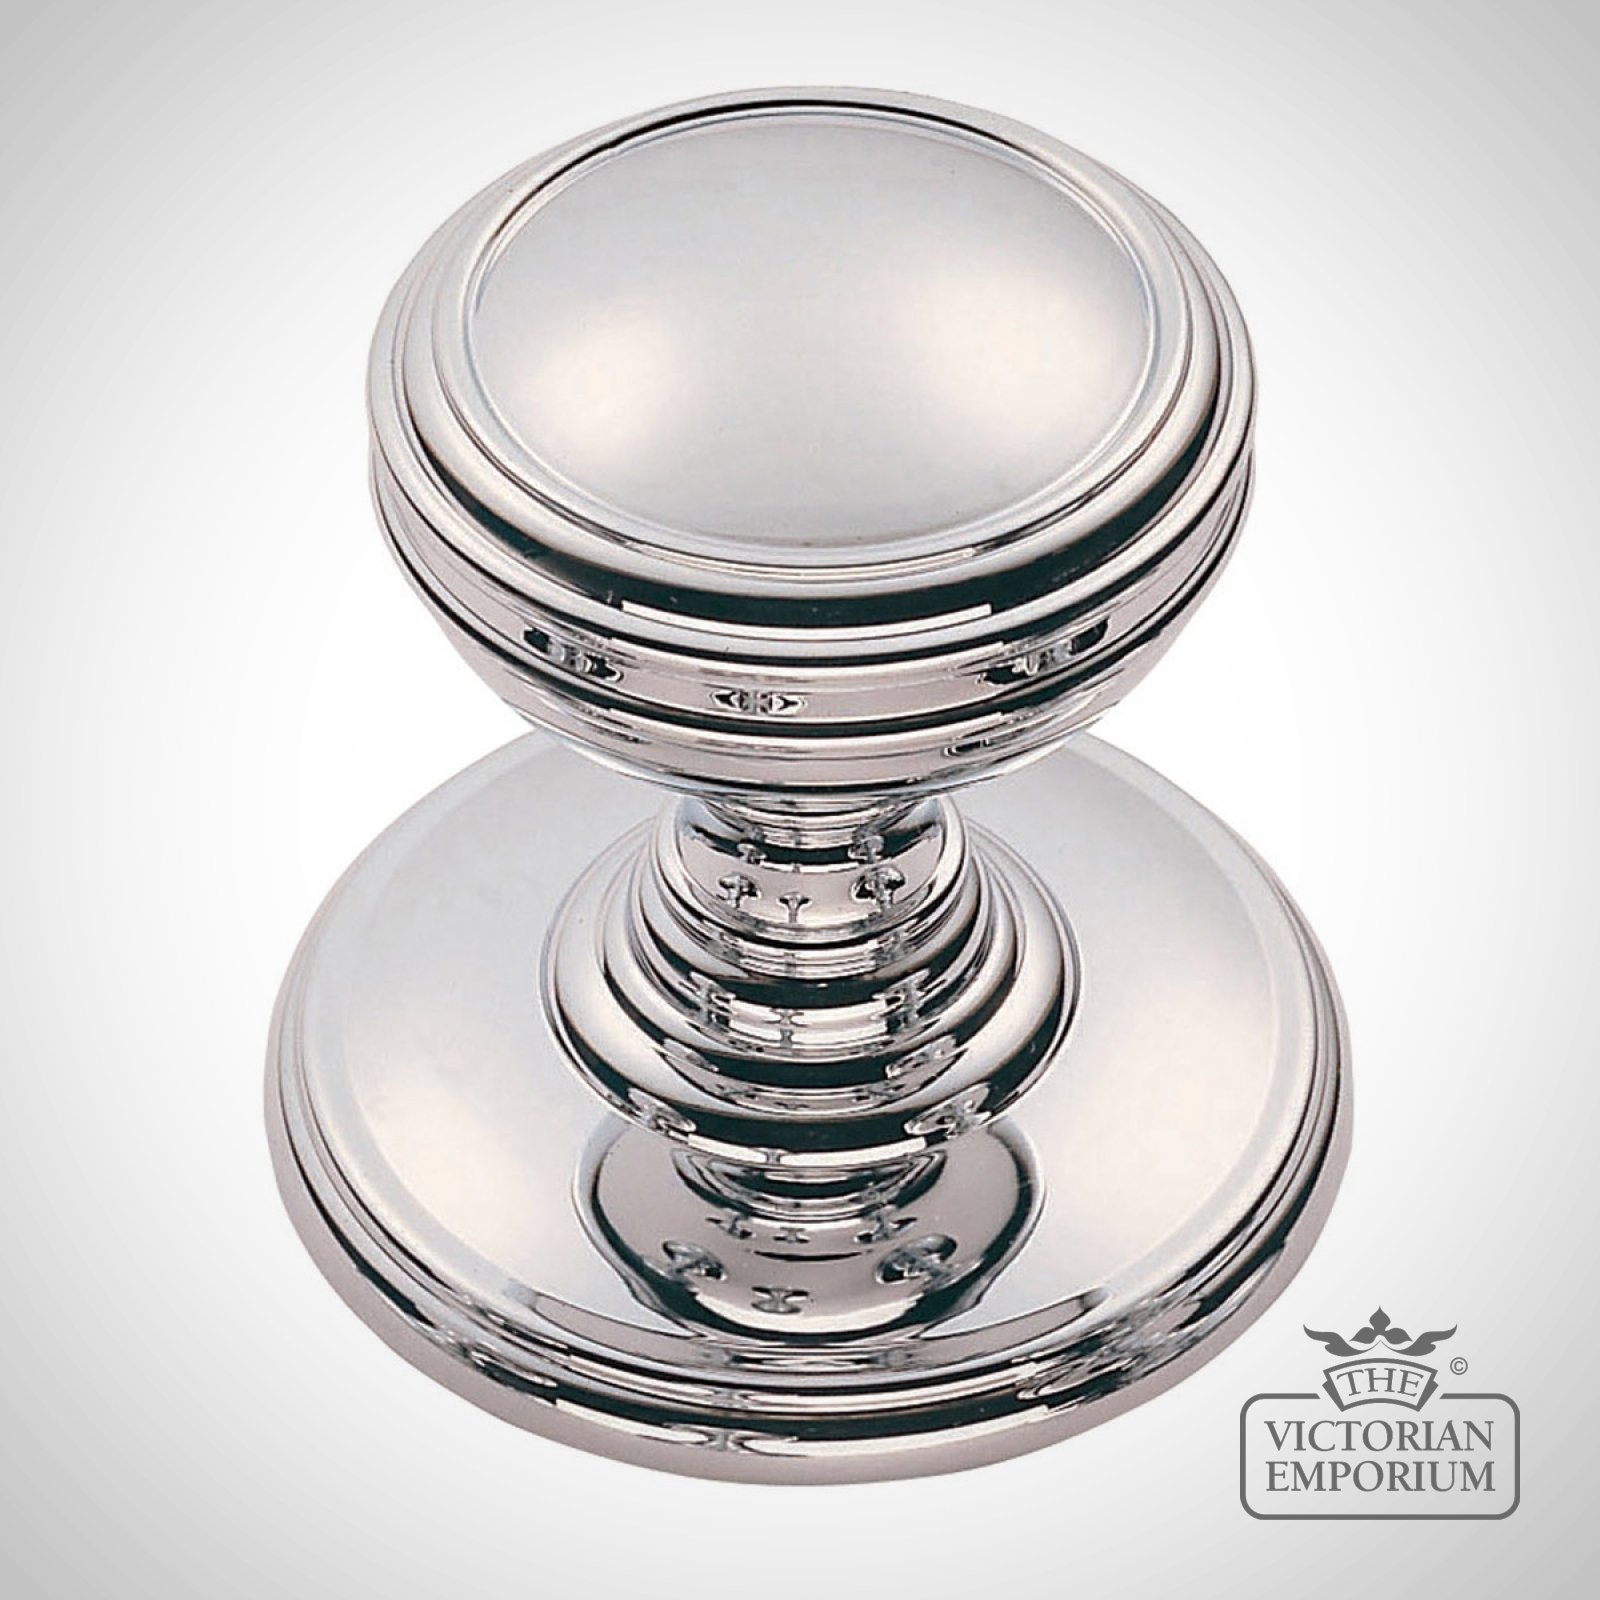 Metal circular cupboard knob - 30mm